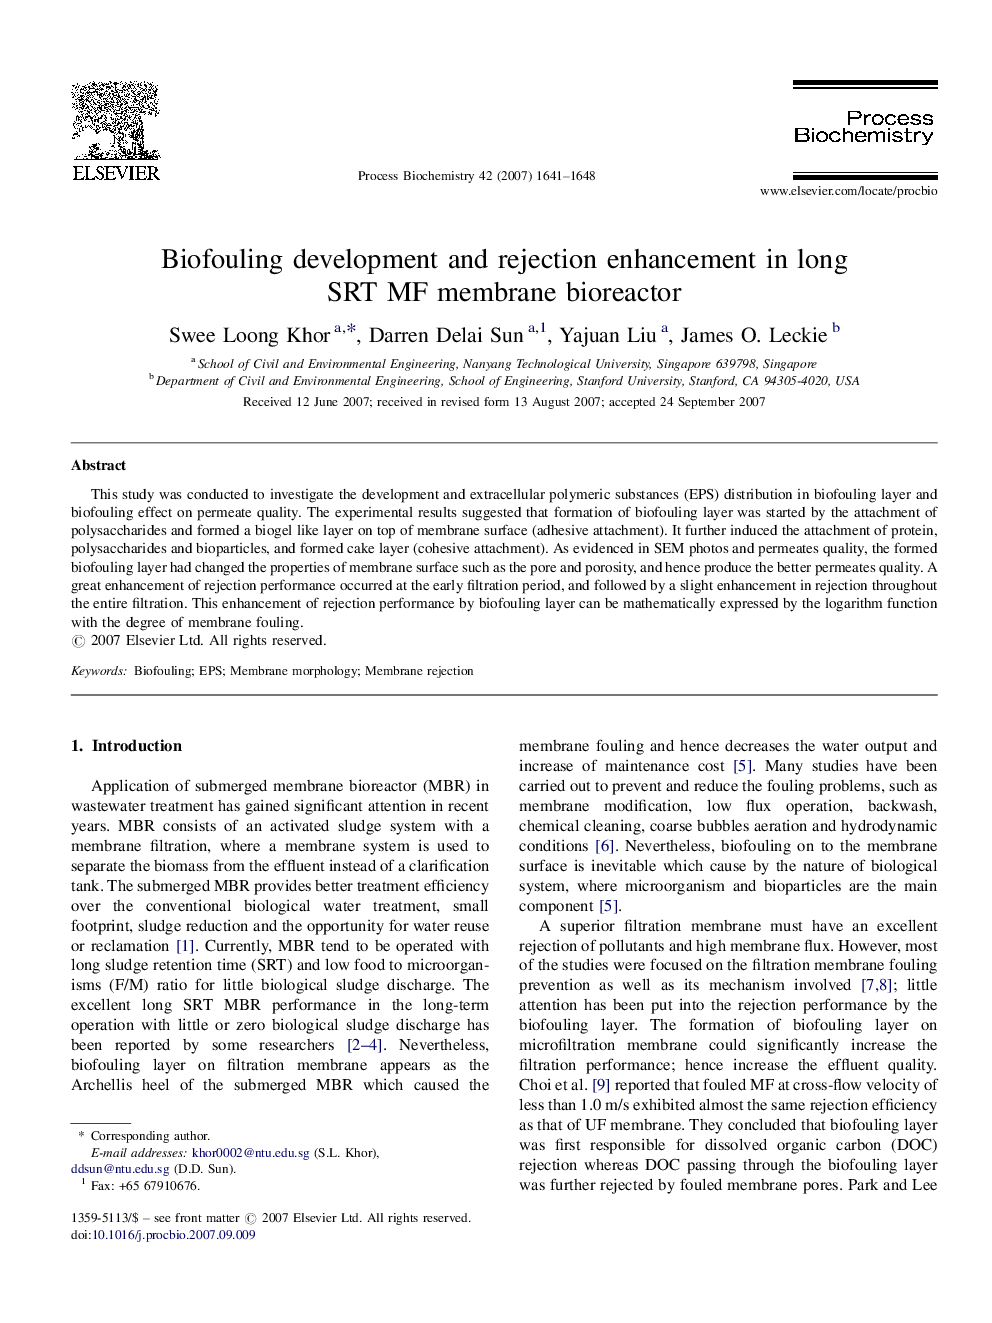 Biofouling development and rejection enhancement in long SRT MF membrane bioreactor